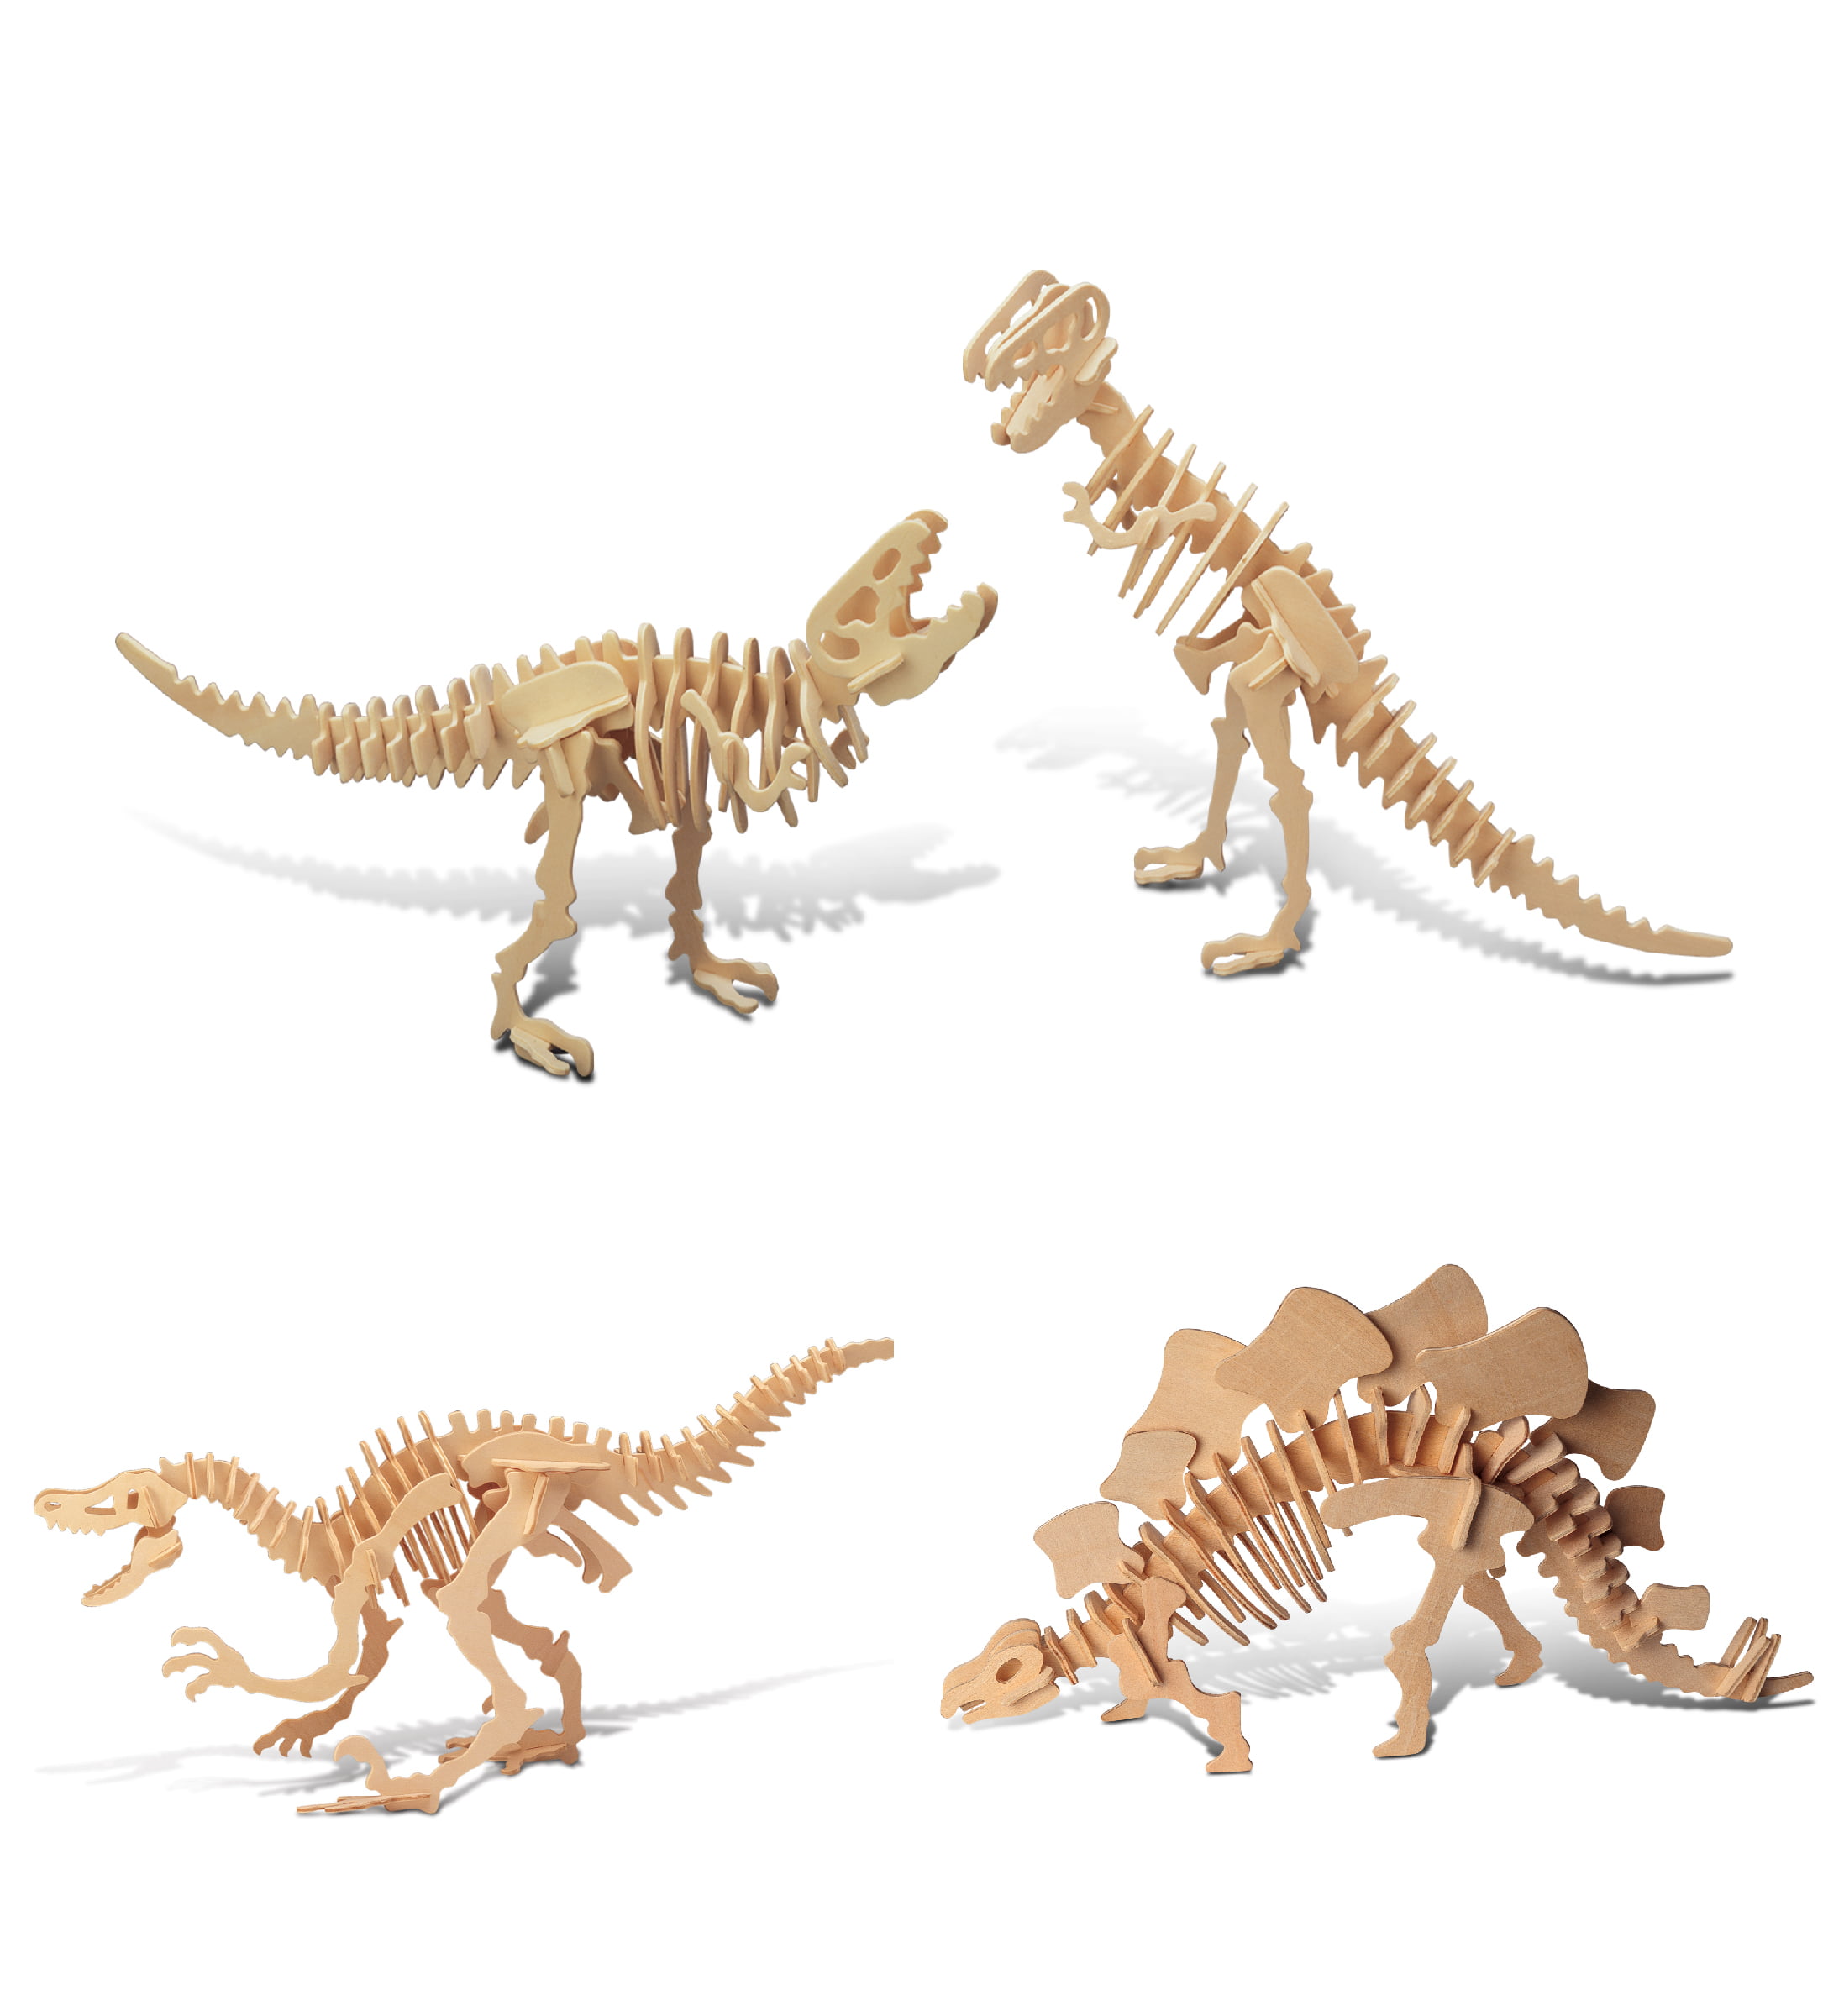 Balsa Wood 3D Puzzle Educational Toy Assembly Dinosaur STyracosaurus Free Ship 